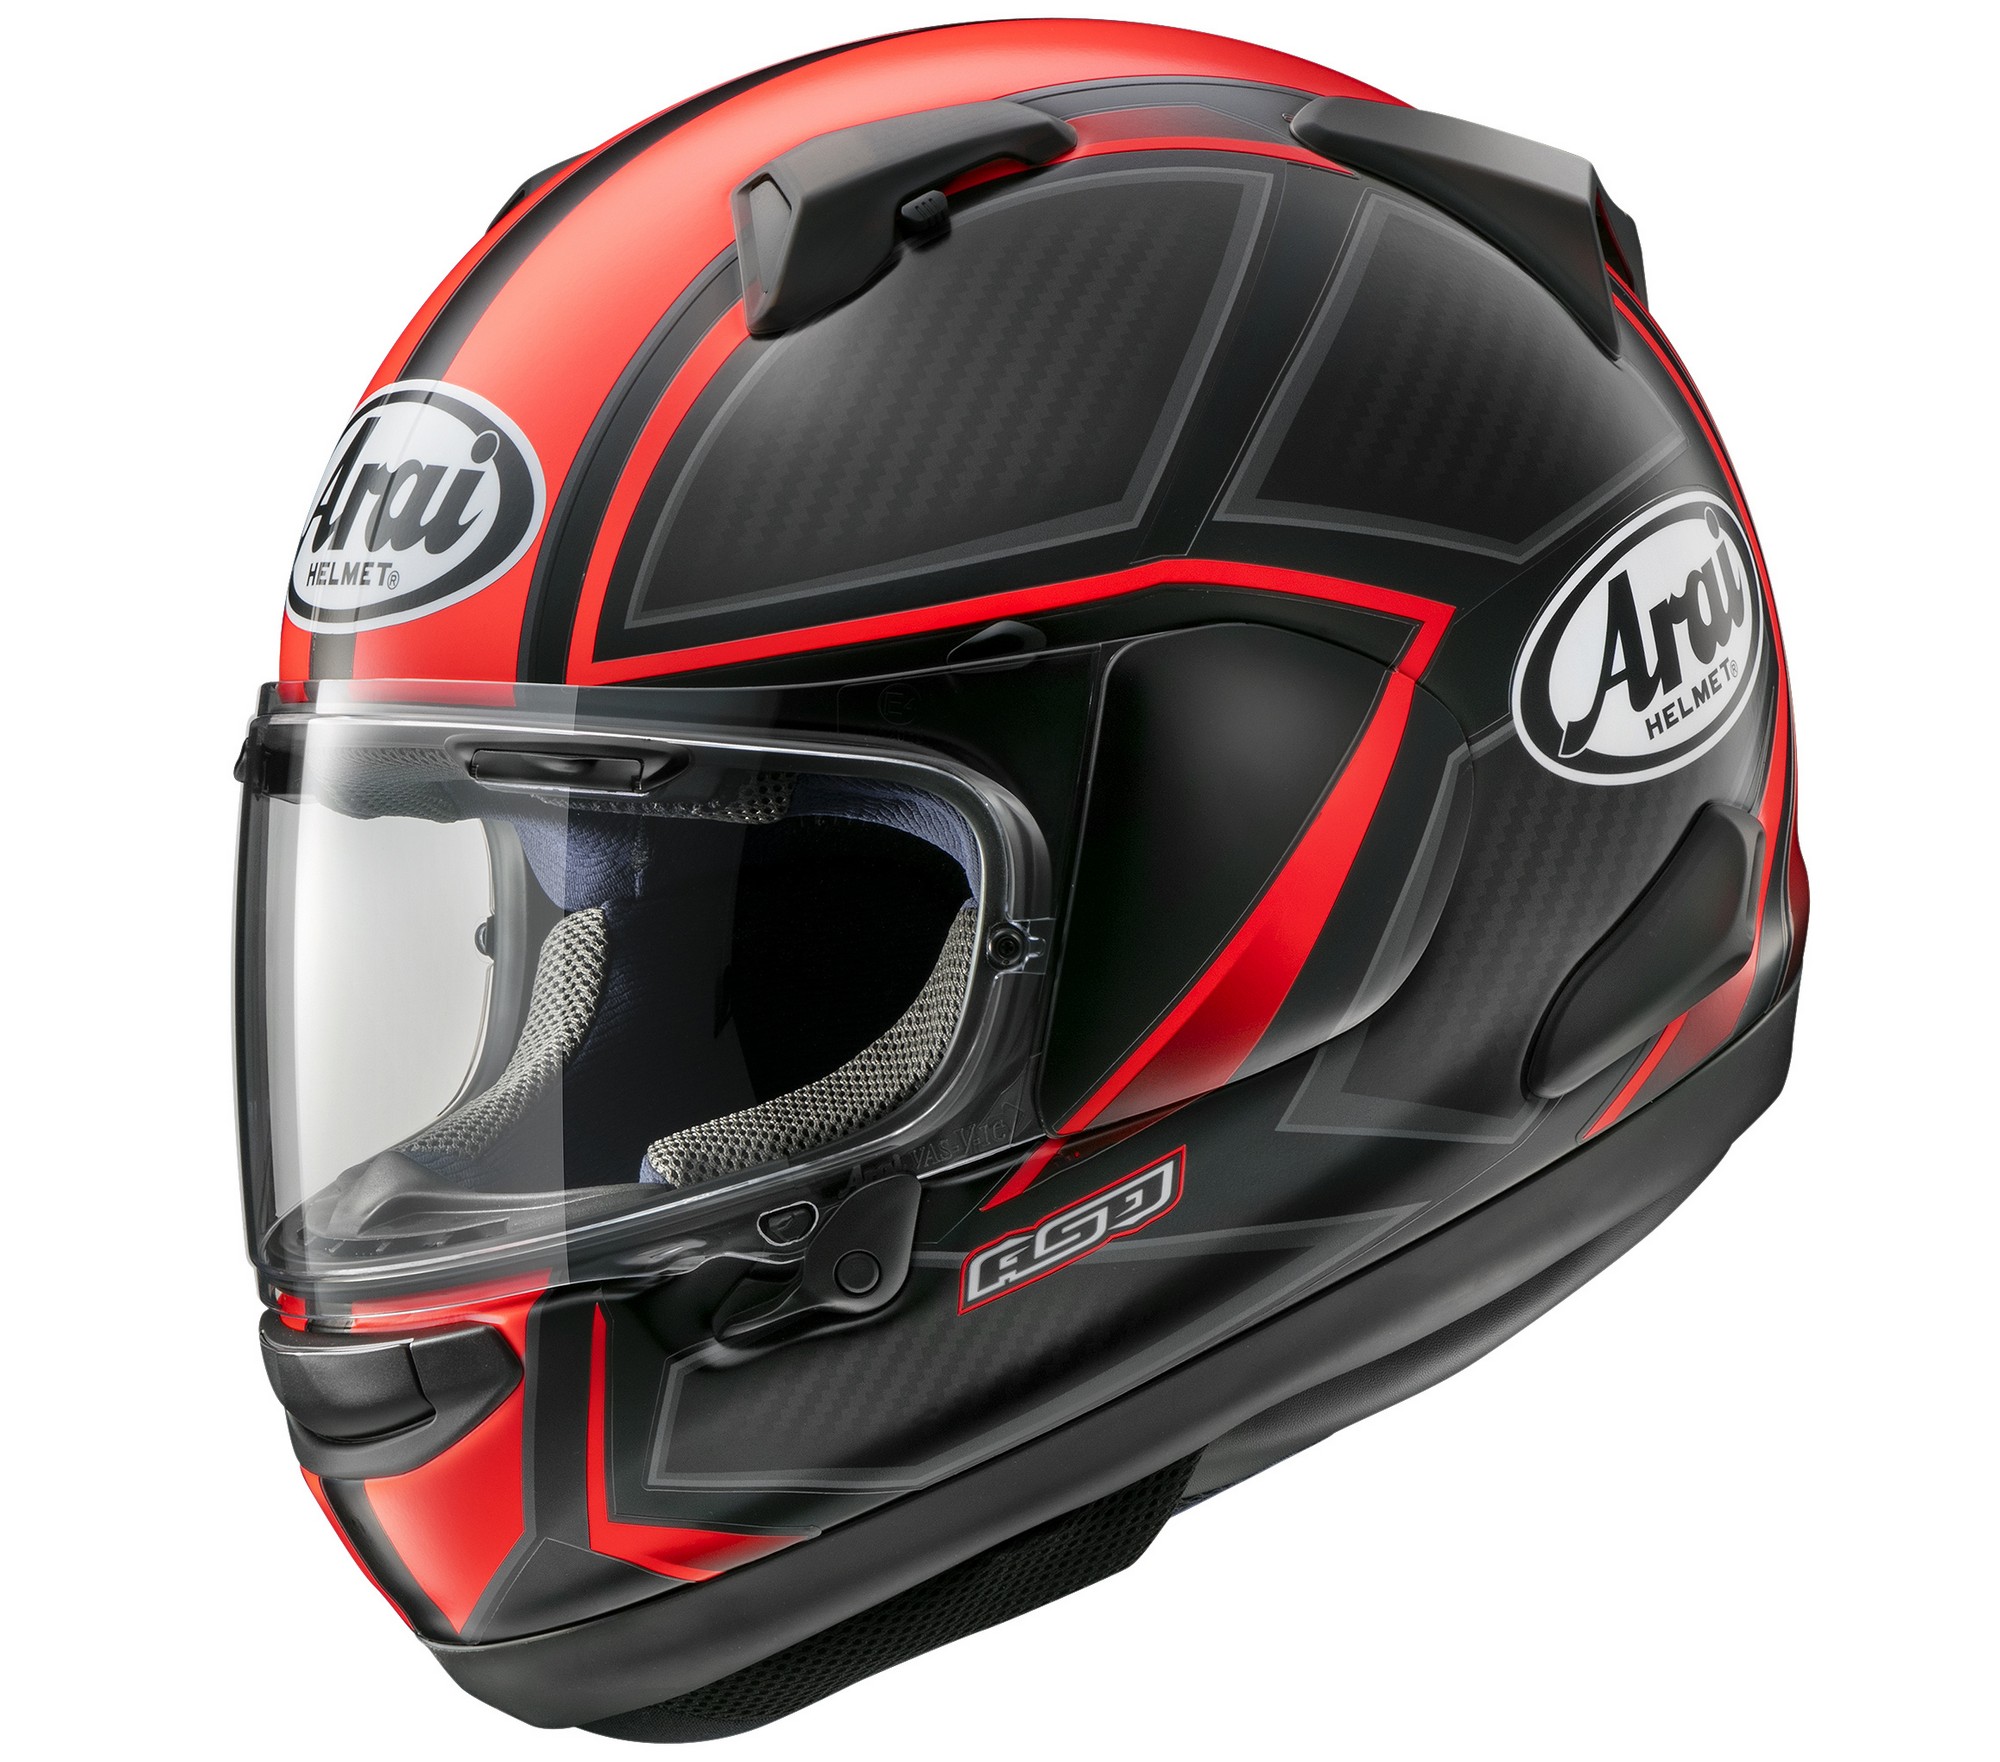 Arai Quantum-X Spine Motorcycle Helmet (M2020D) Red | eBay